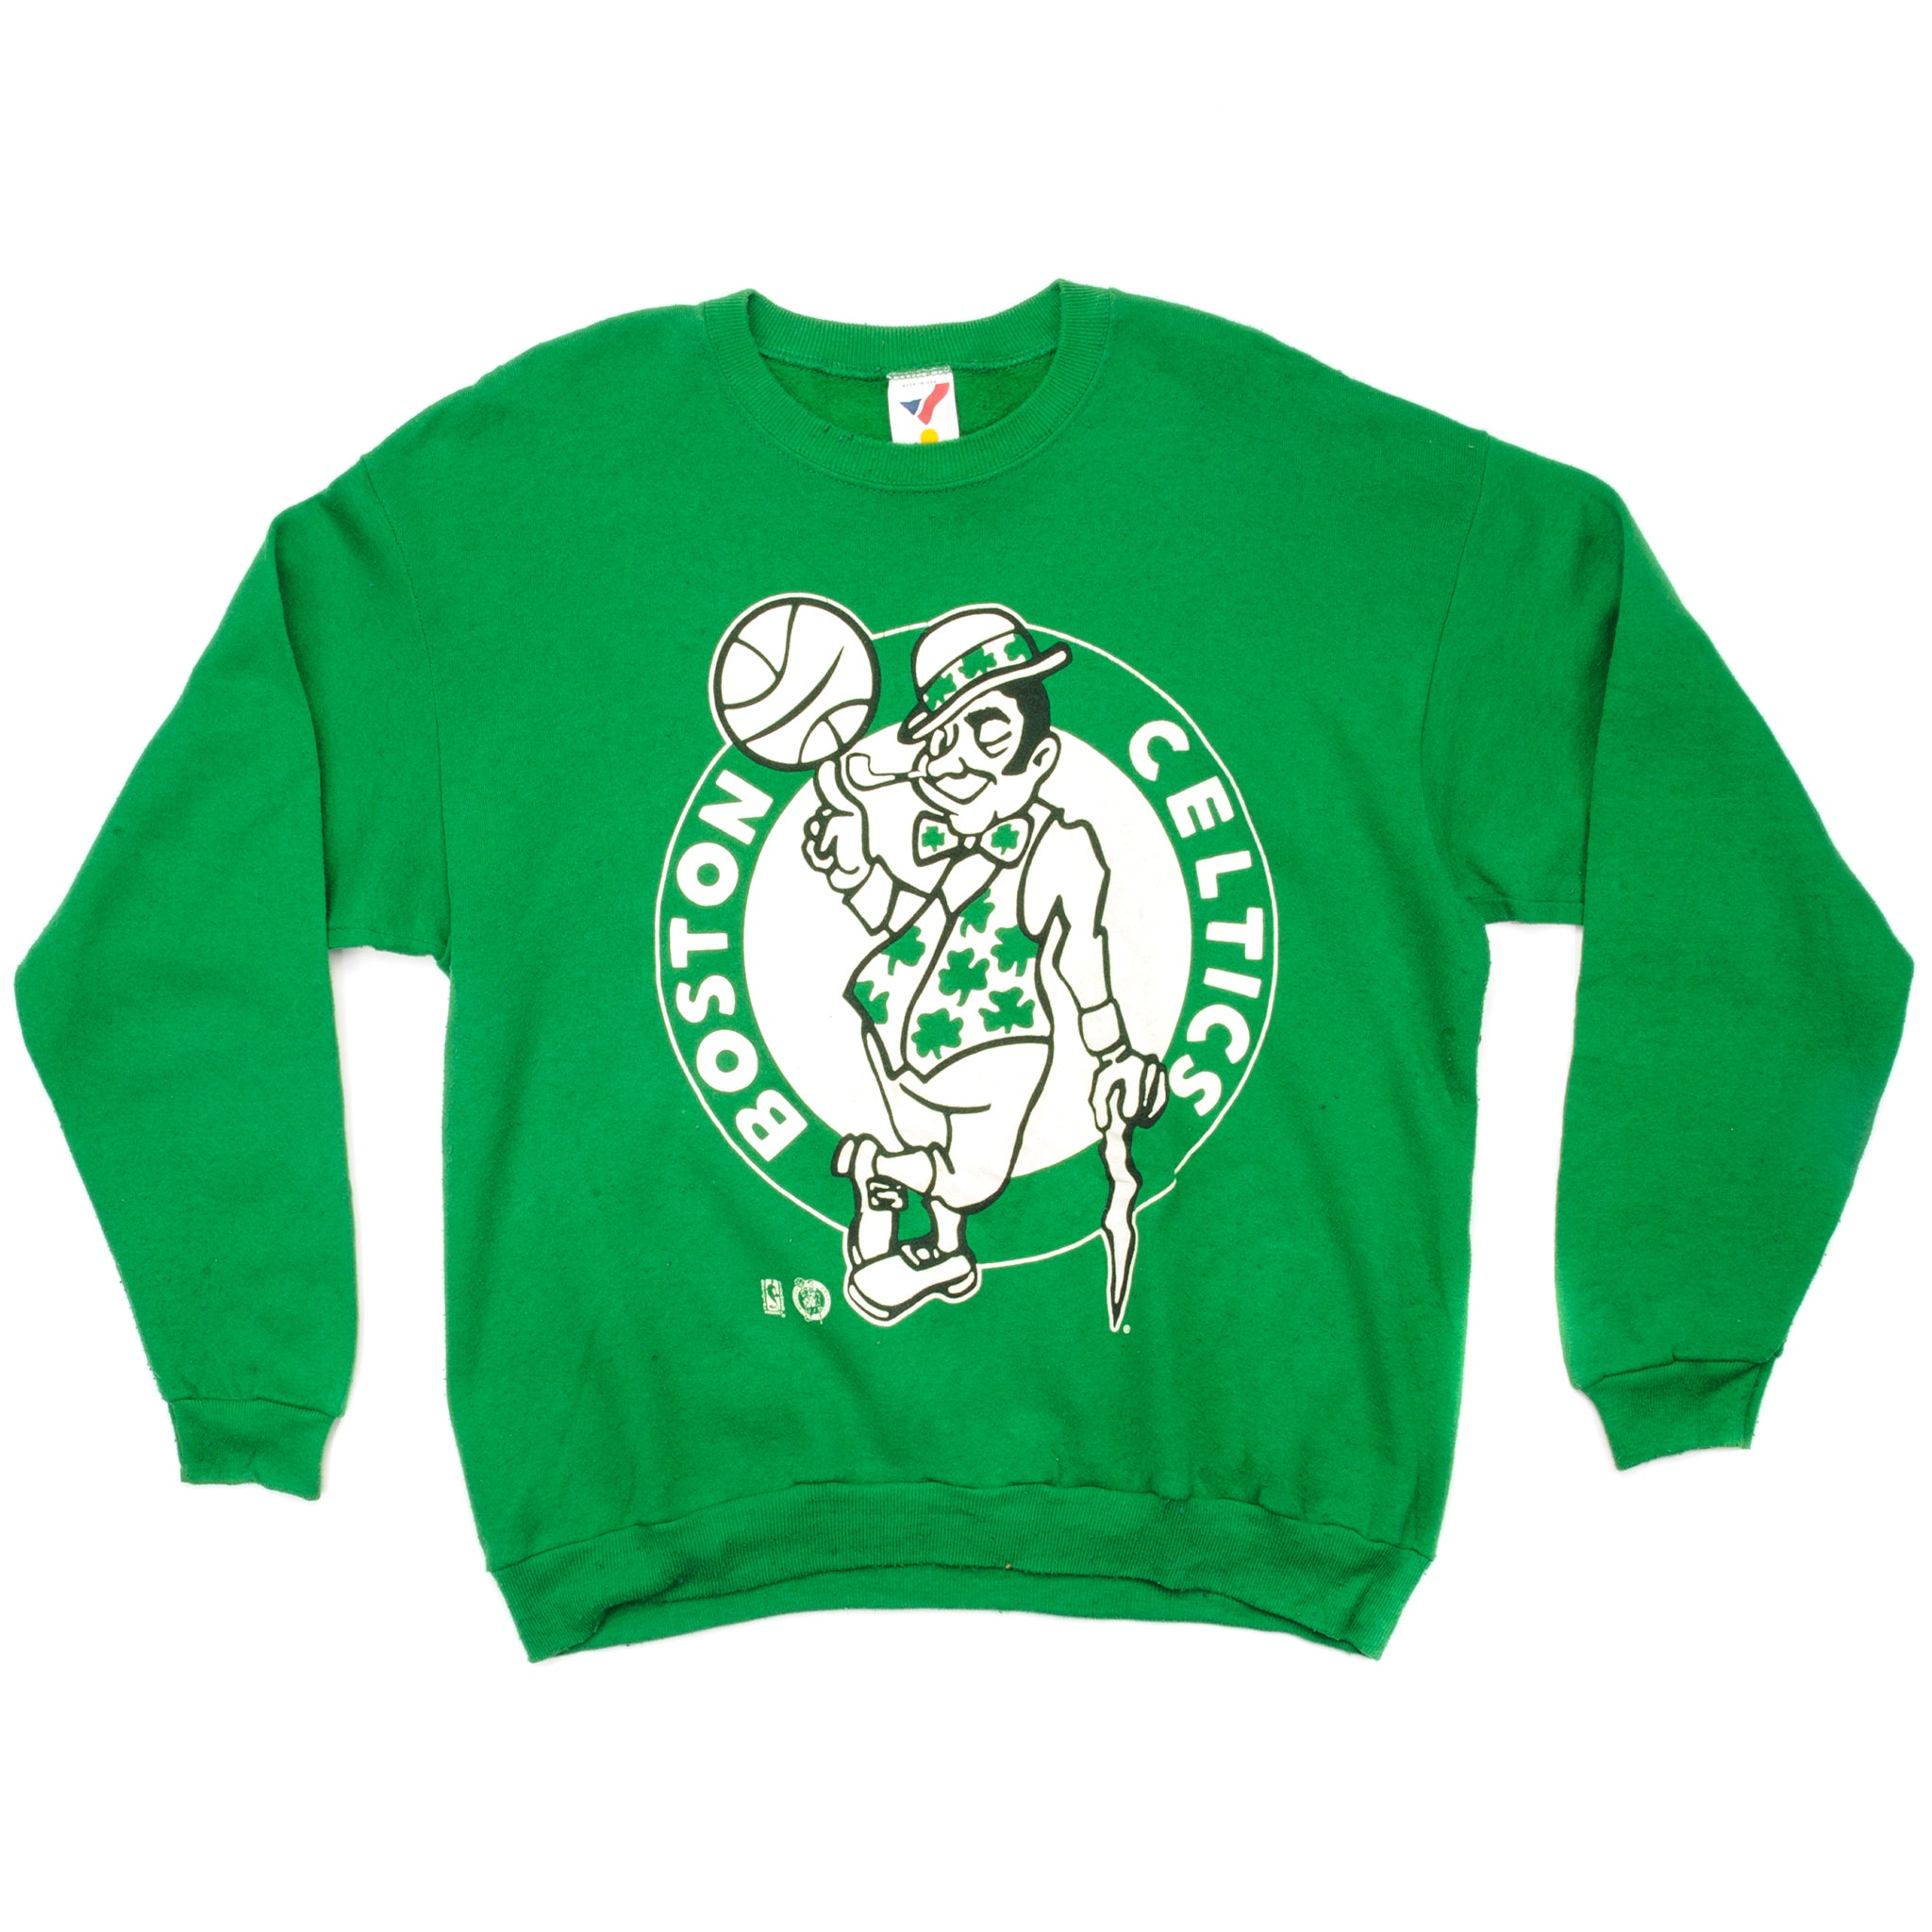 Vintage NBA Boston Celtics Tee Shirt Size Large Made in USA 1980s